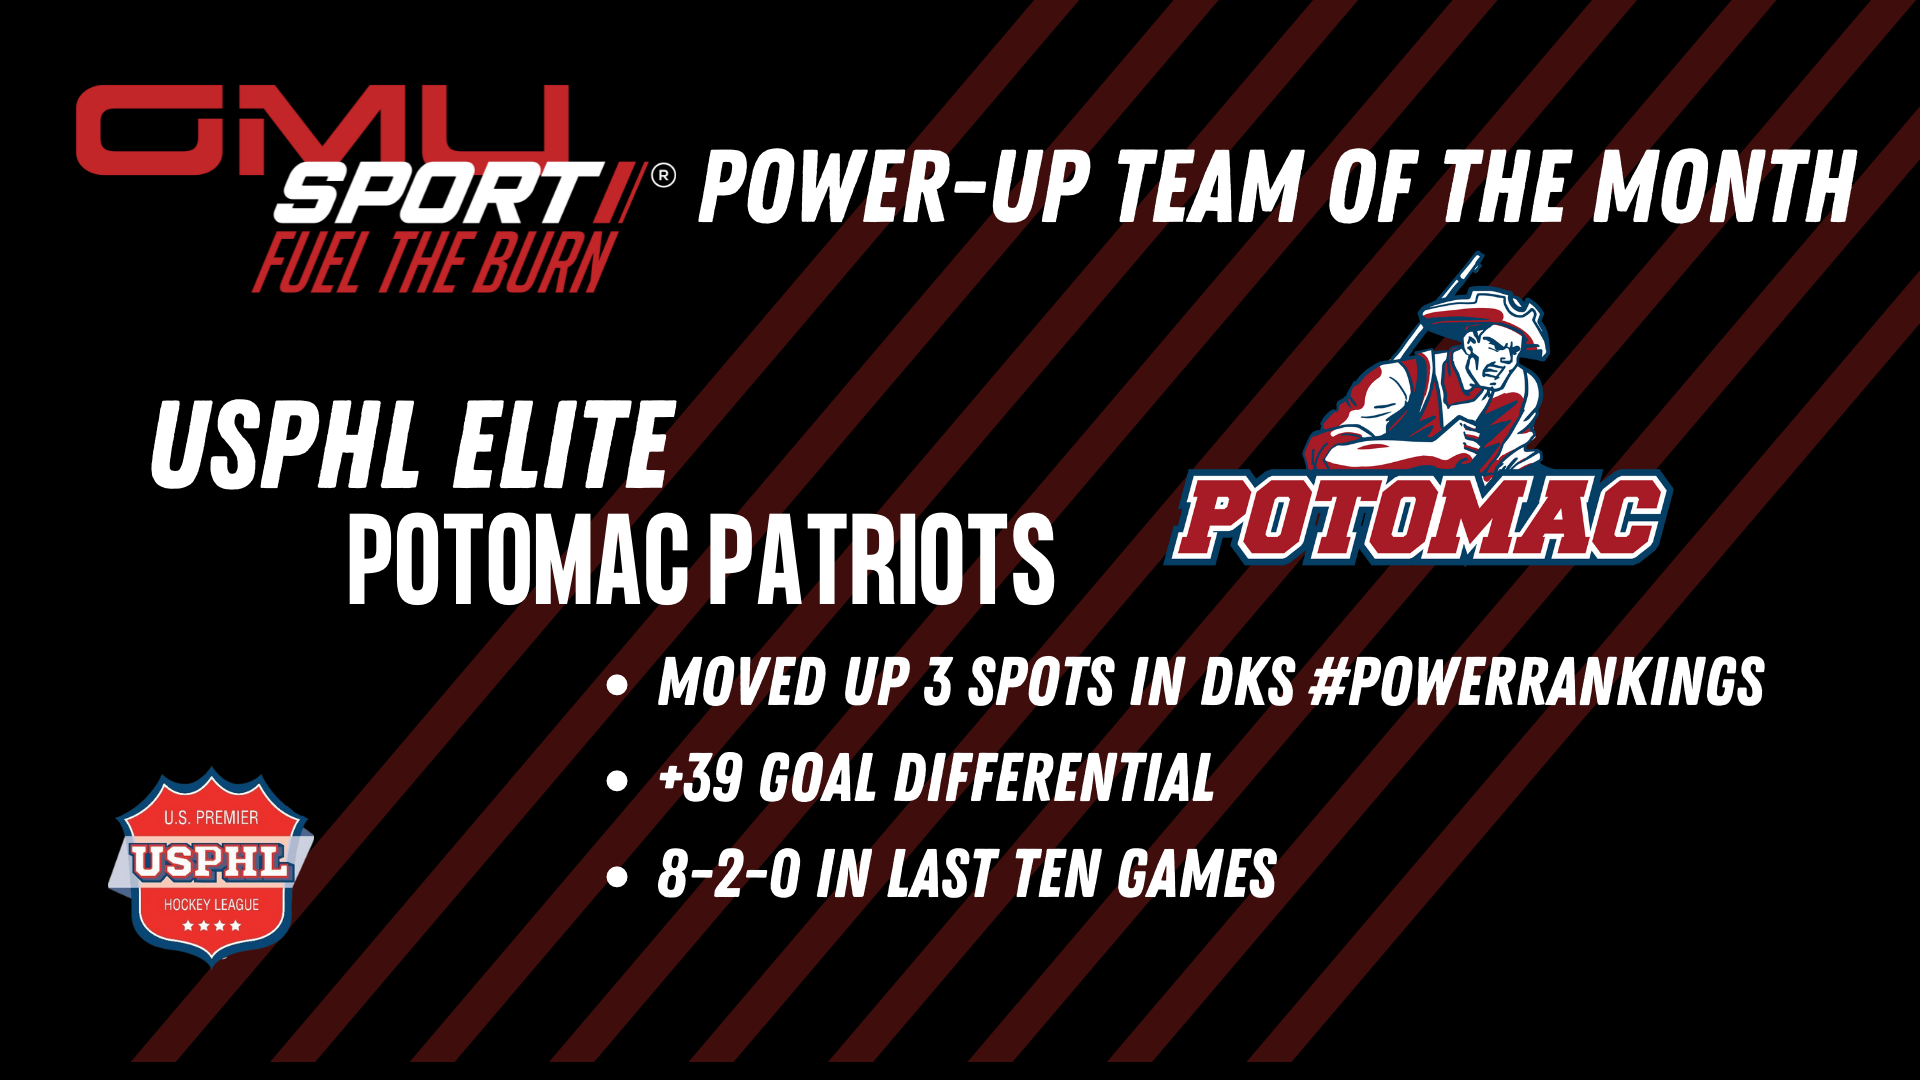 The Dan K Show, USPHL Present GMU Sport Power-Up Teams Of The Month; Potomac Patriots Win Elite Award